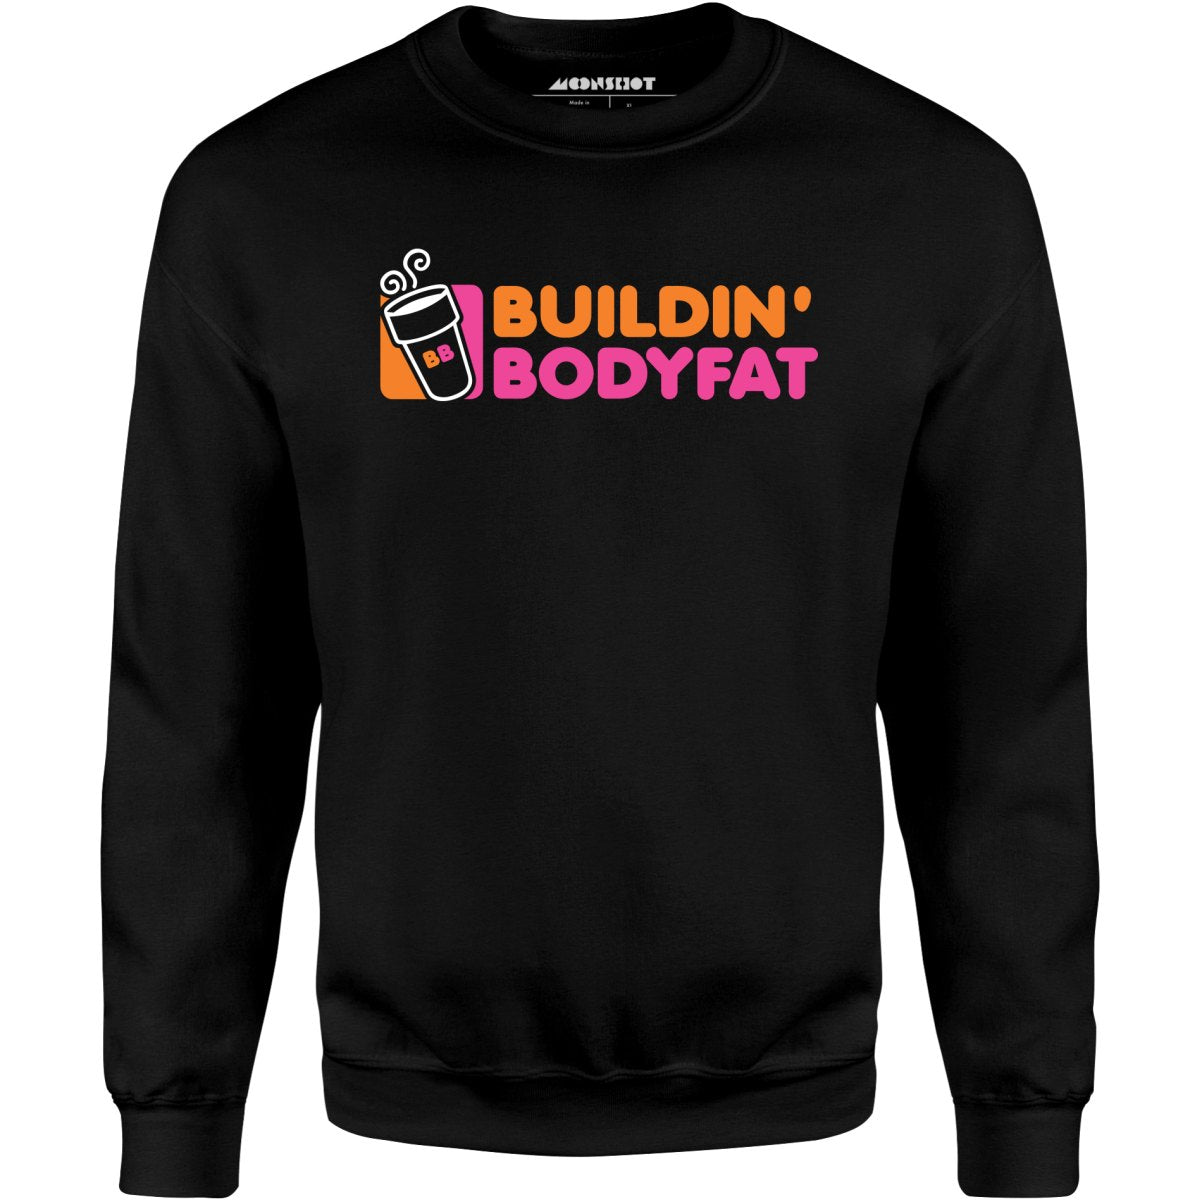 Buildin' Bodyfat - Unisex Sweatshirt